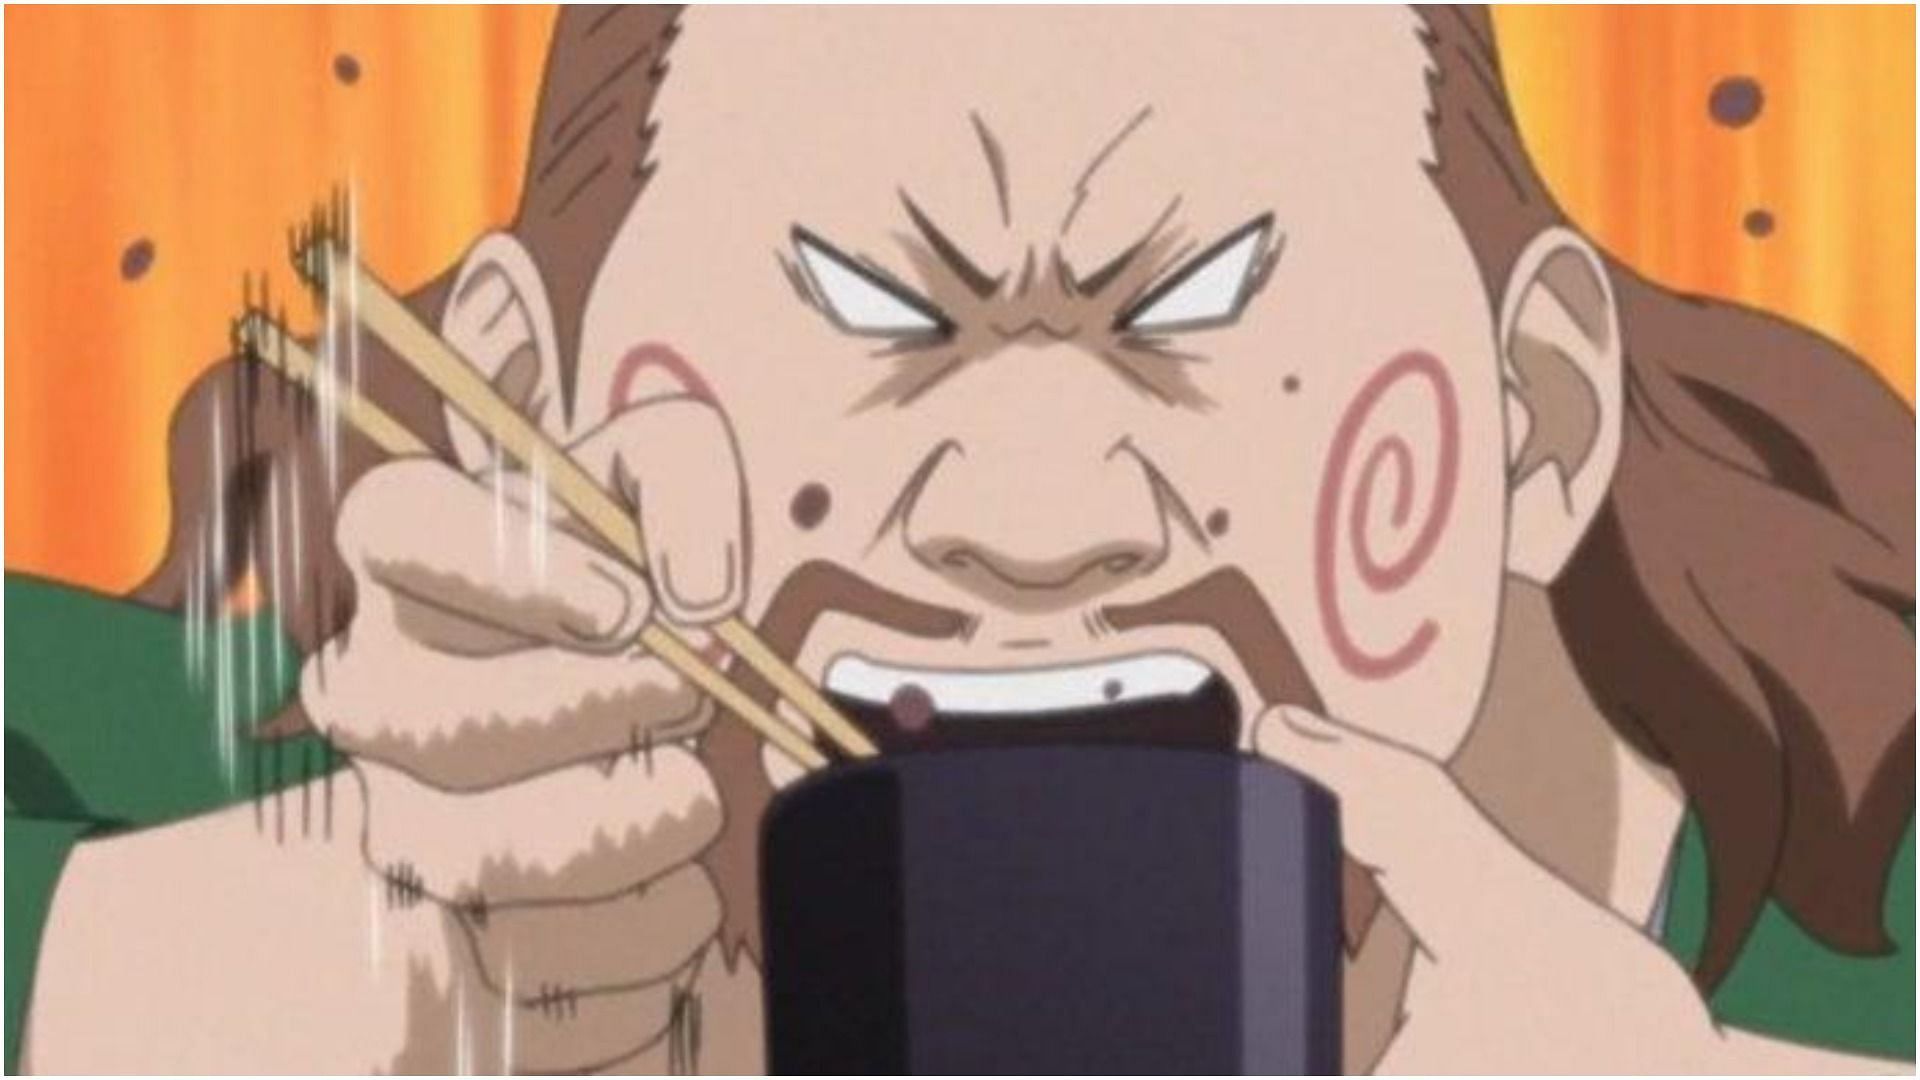 Choji Akemichi as seen in the anime Naruto (Image via Studio Pierrot)